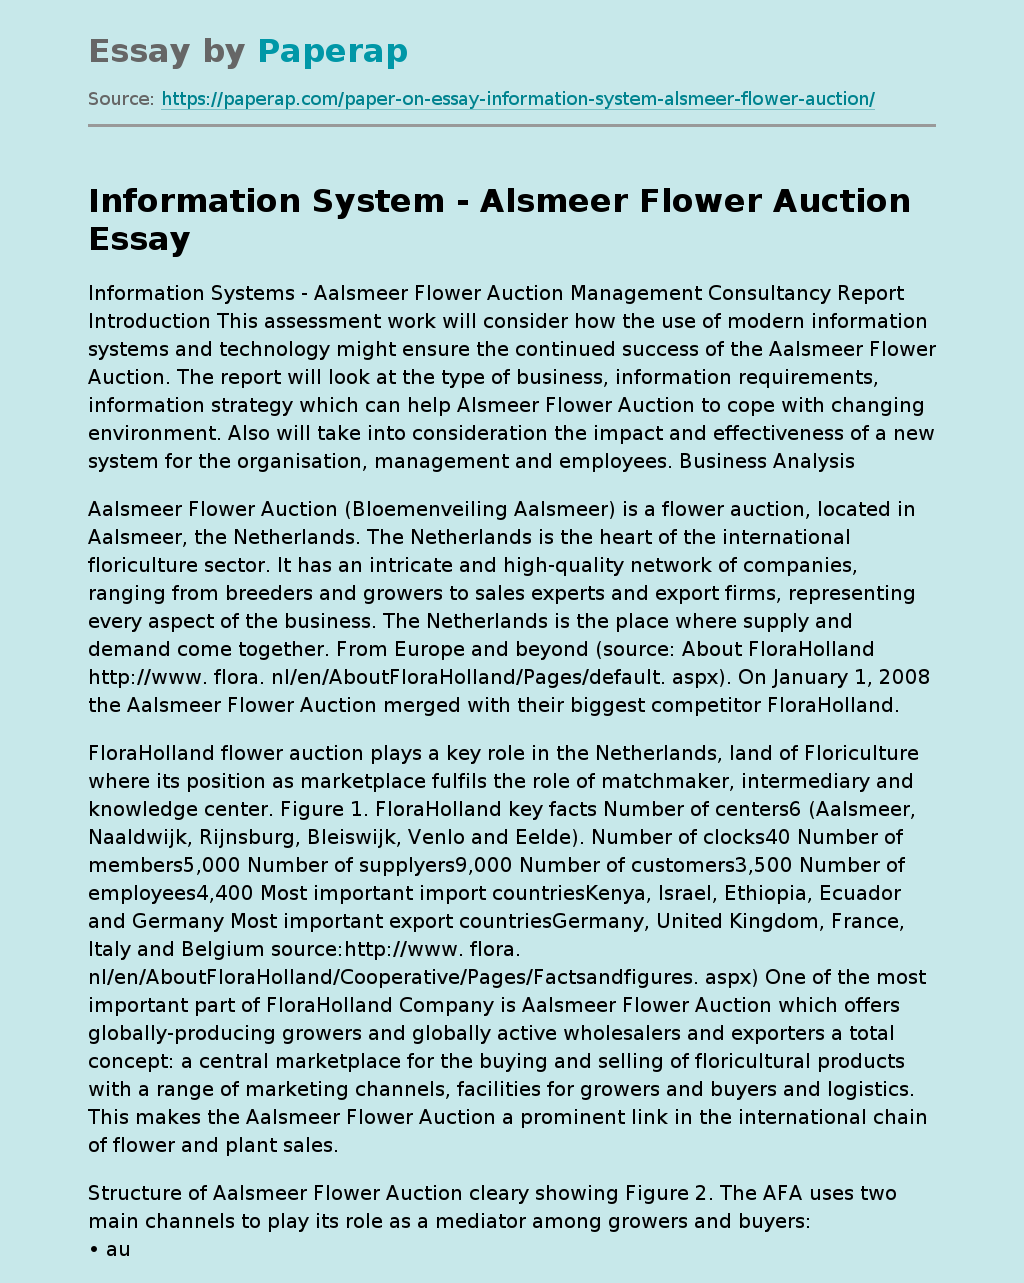 Information System - Alsmeer Flower Auction